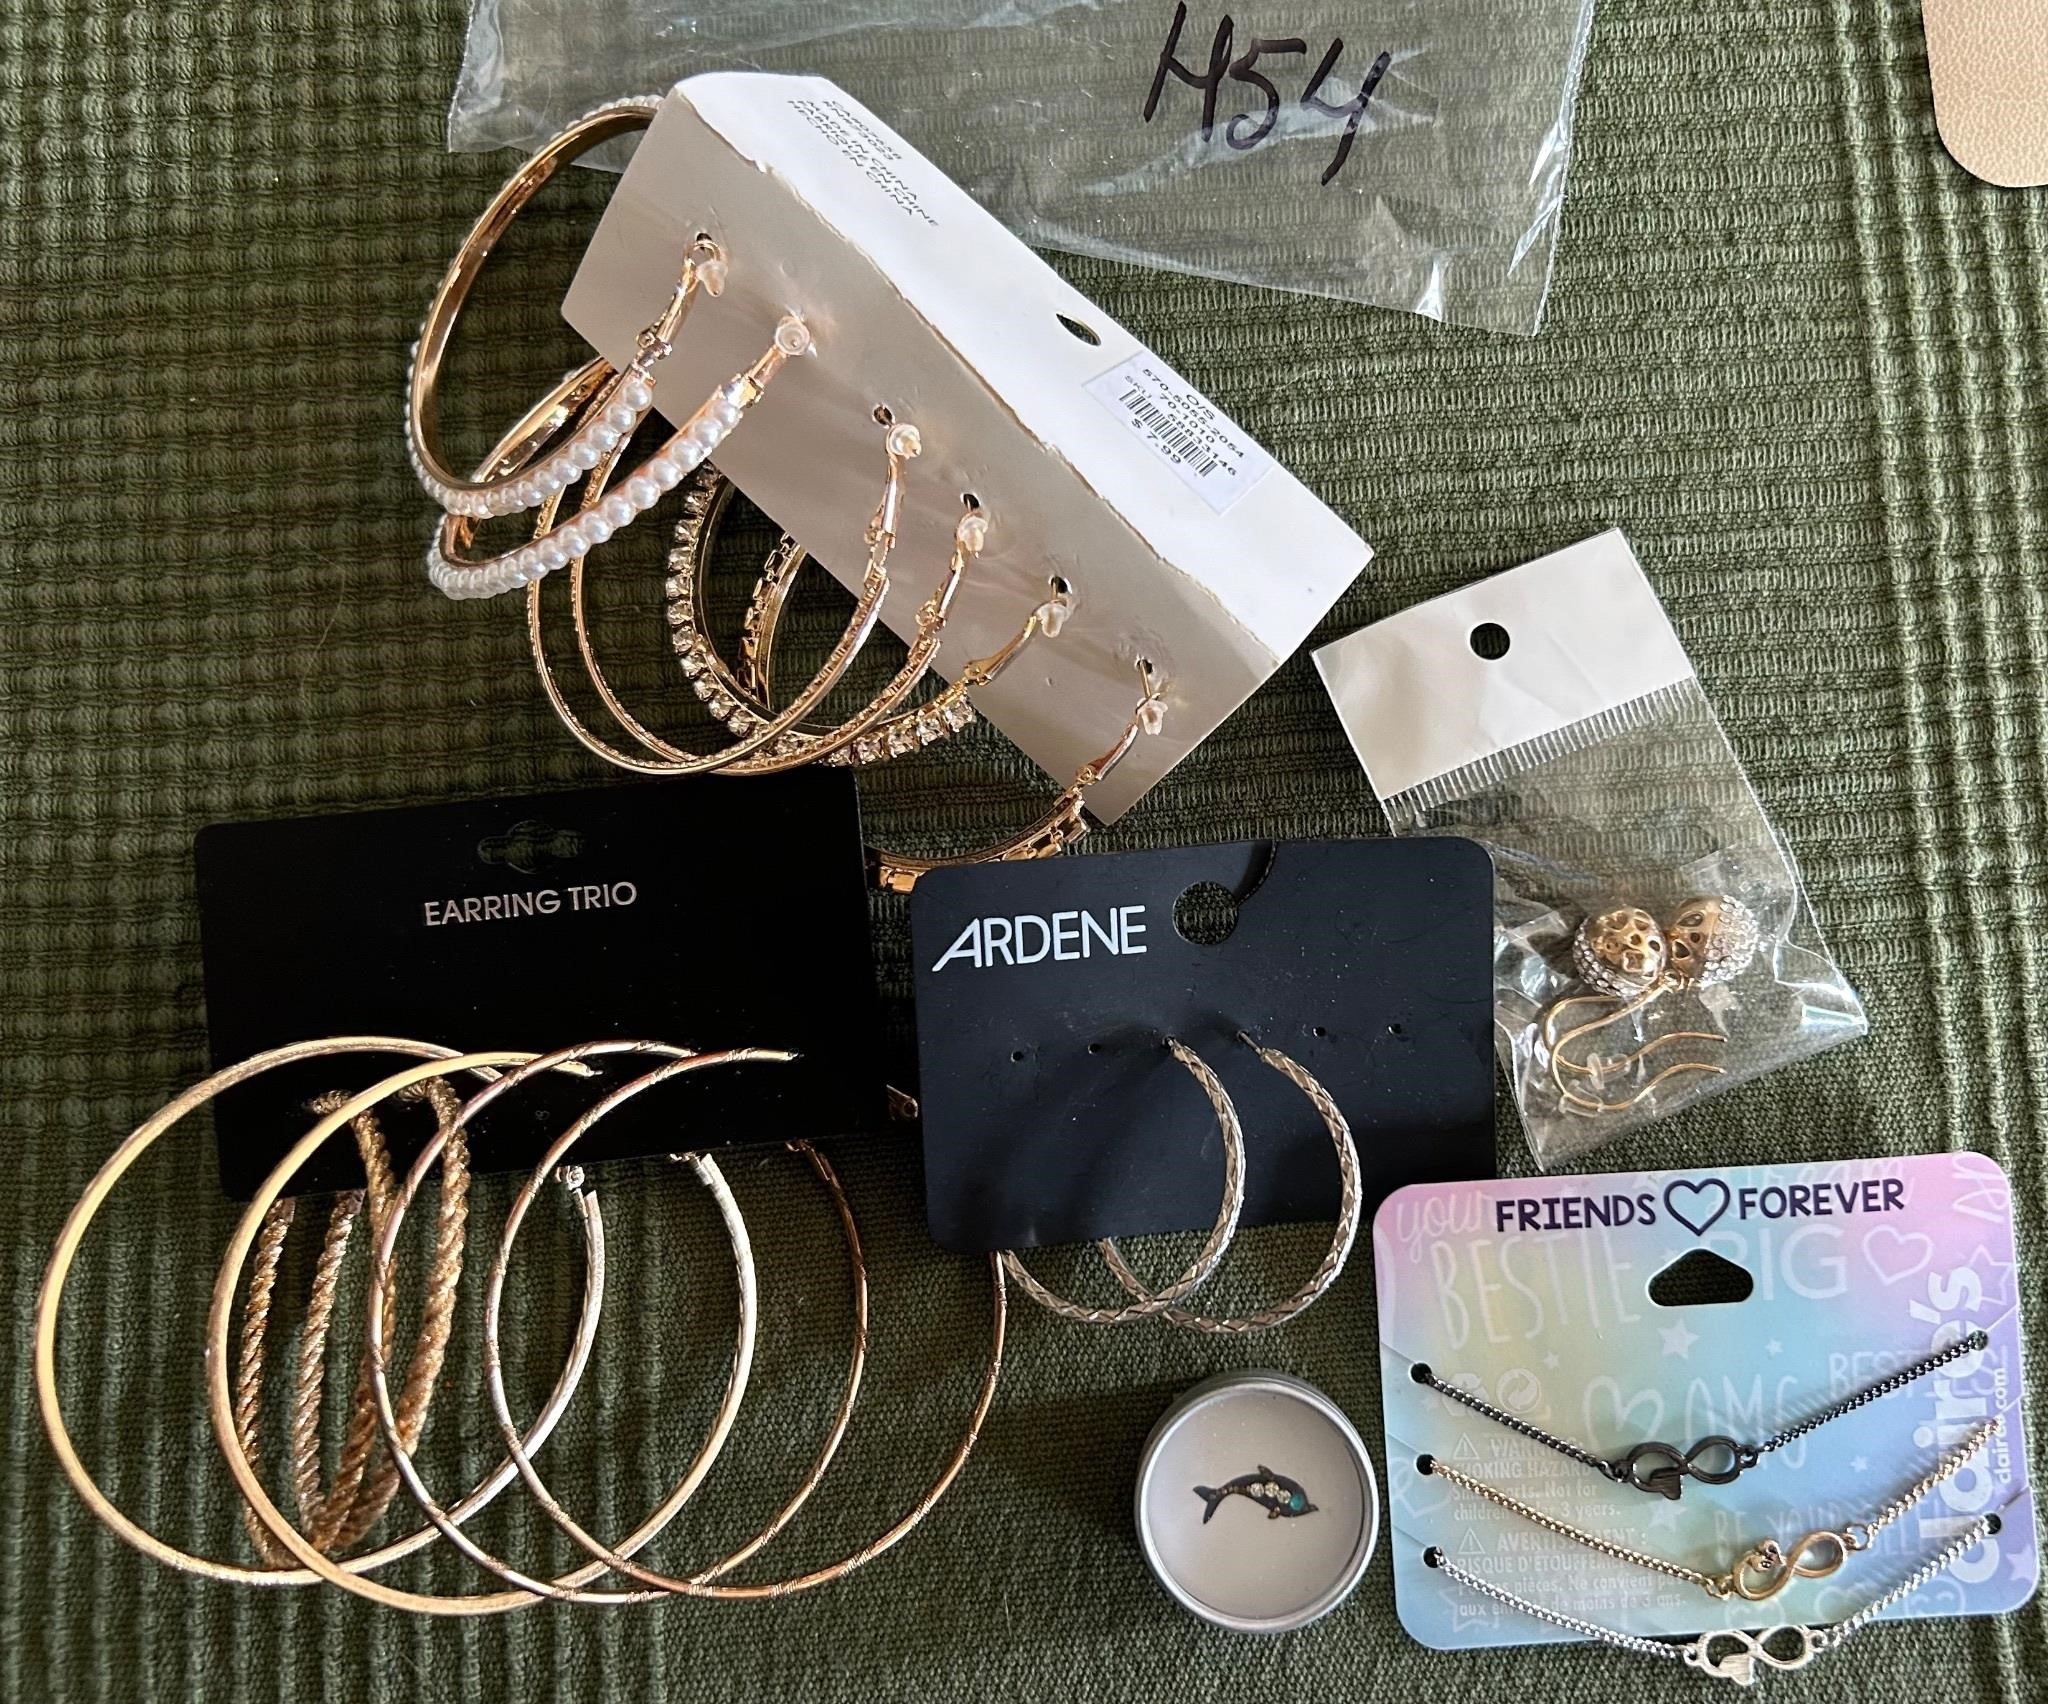 New Earrings and bracelets